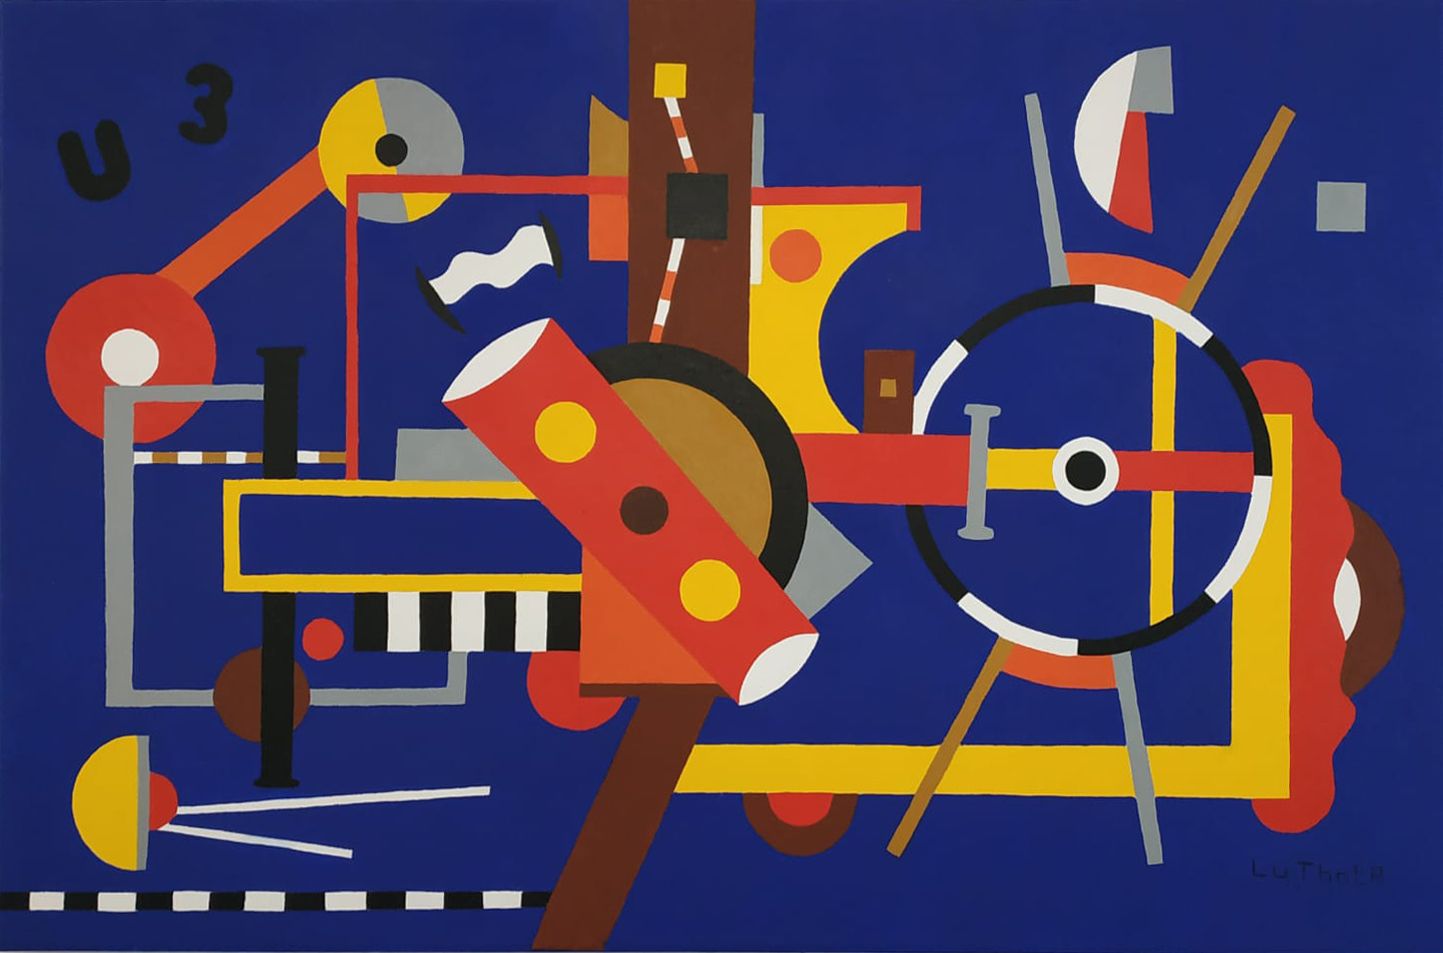 Johann Luthner 蓝色背景上的机械元素
布面油画，右下角有签名
92 x 60厘米